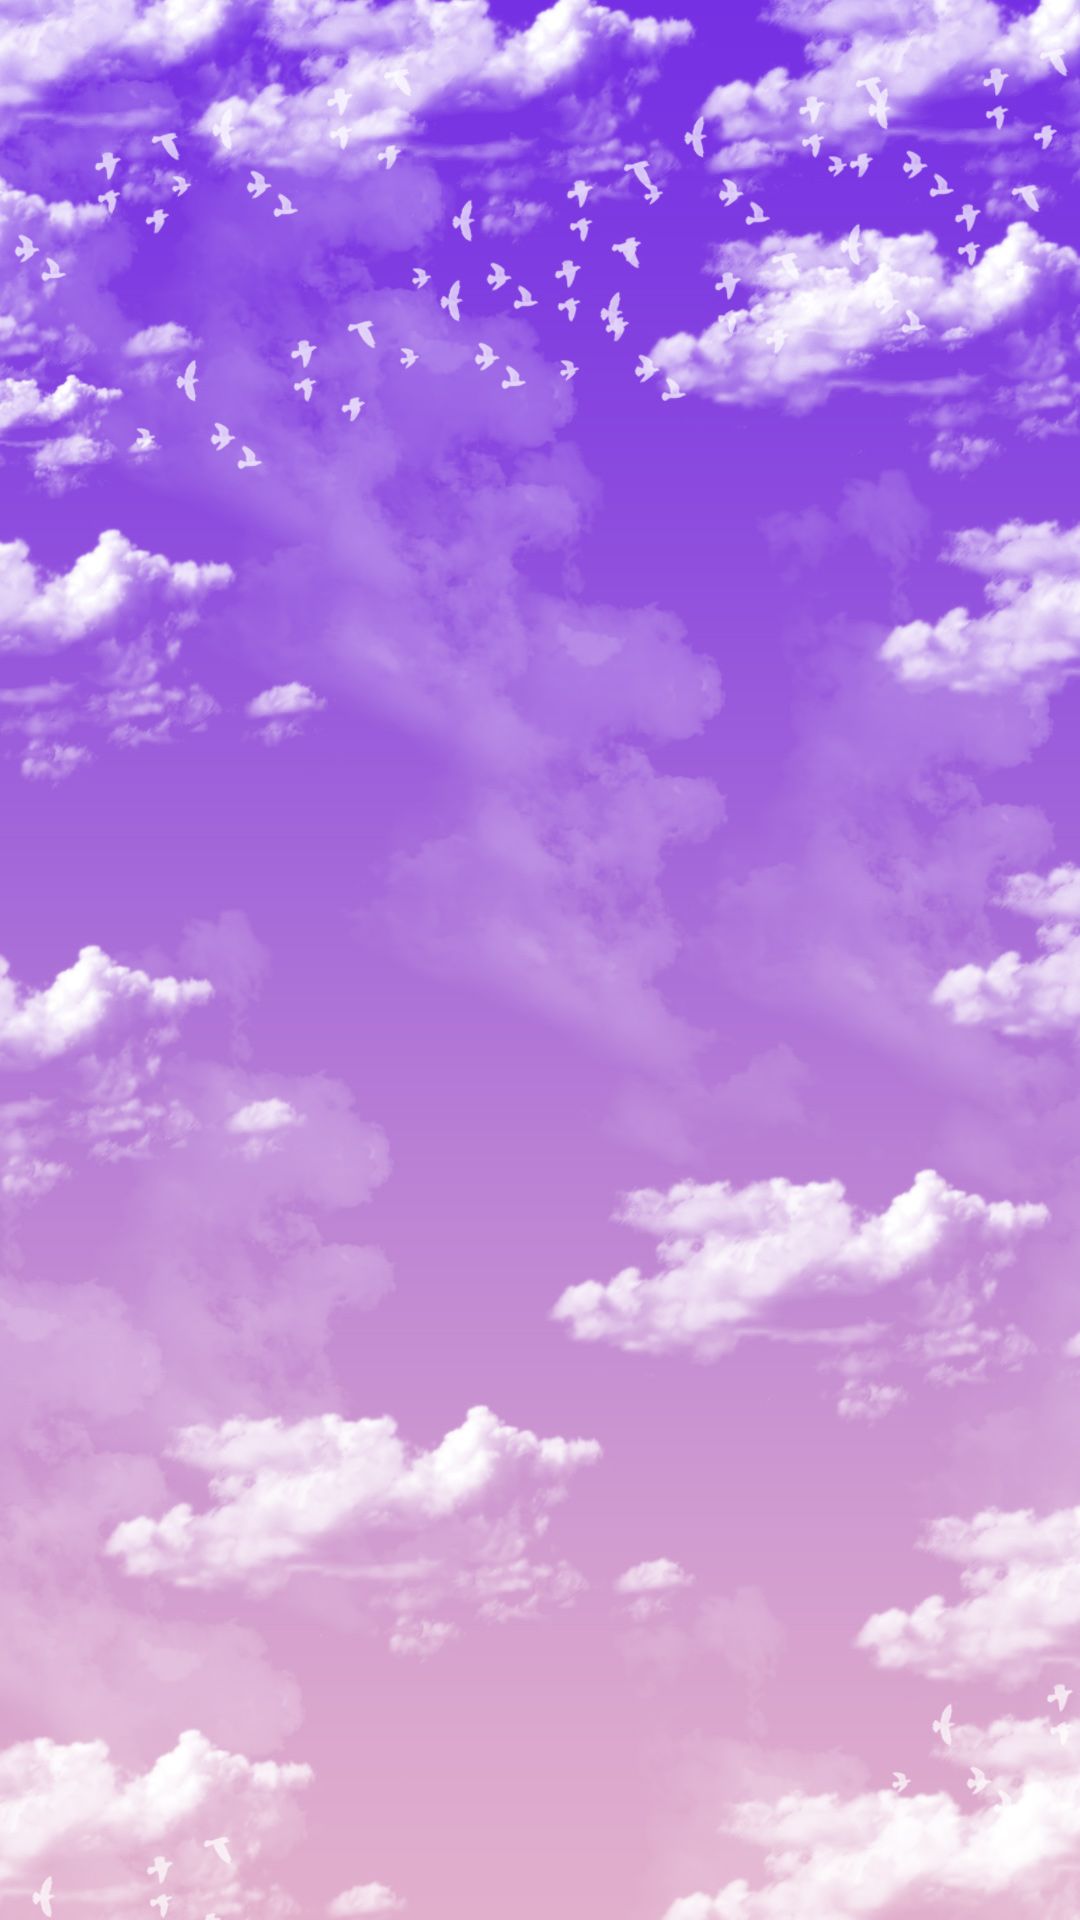 Purple aesthetic cloud instagram